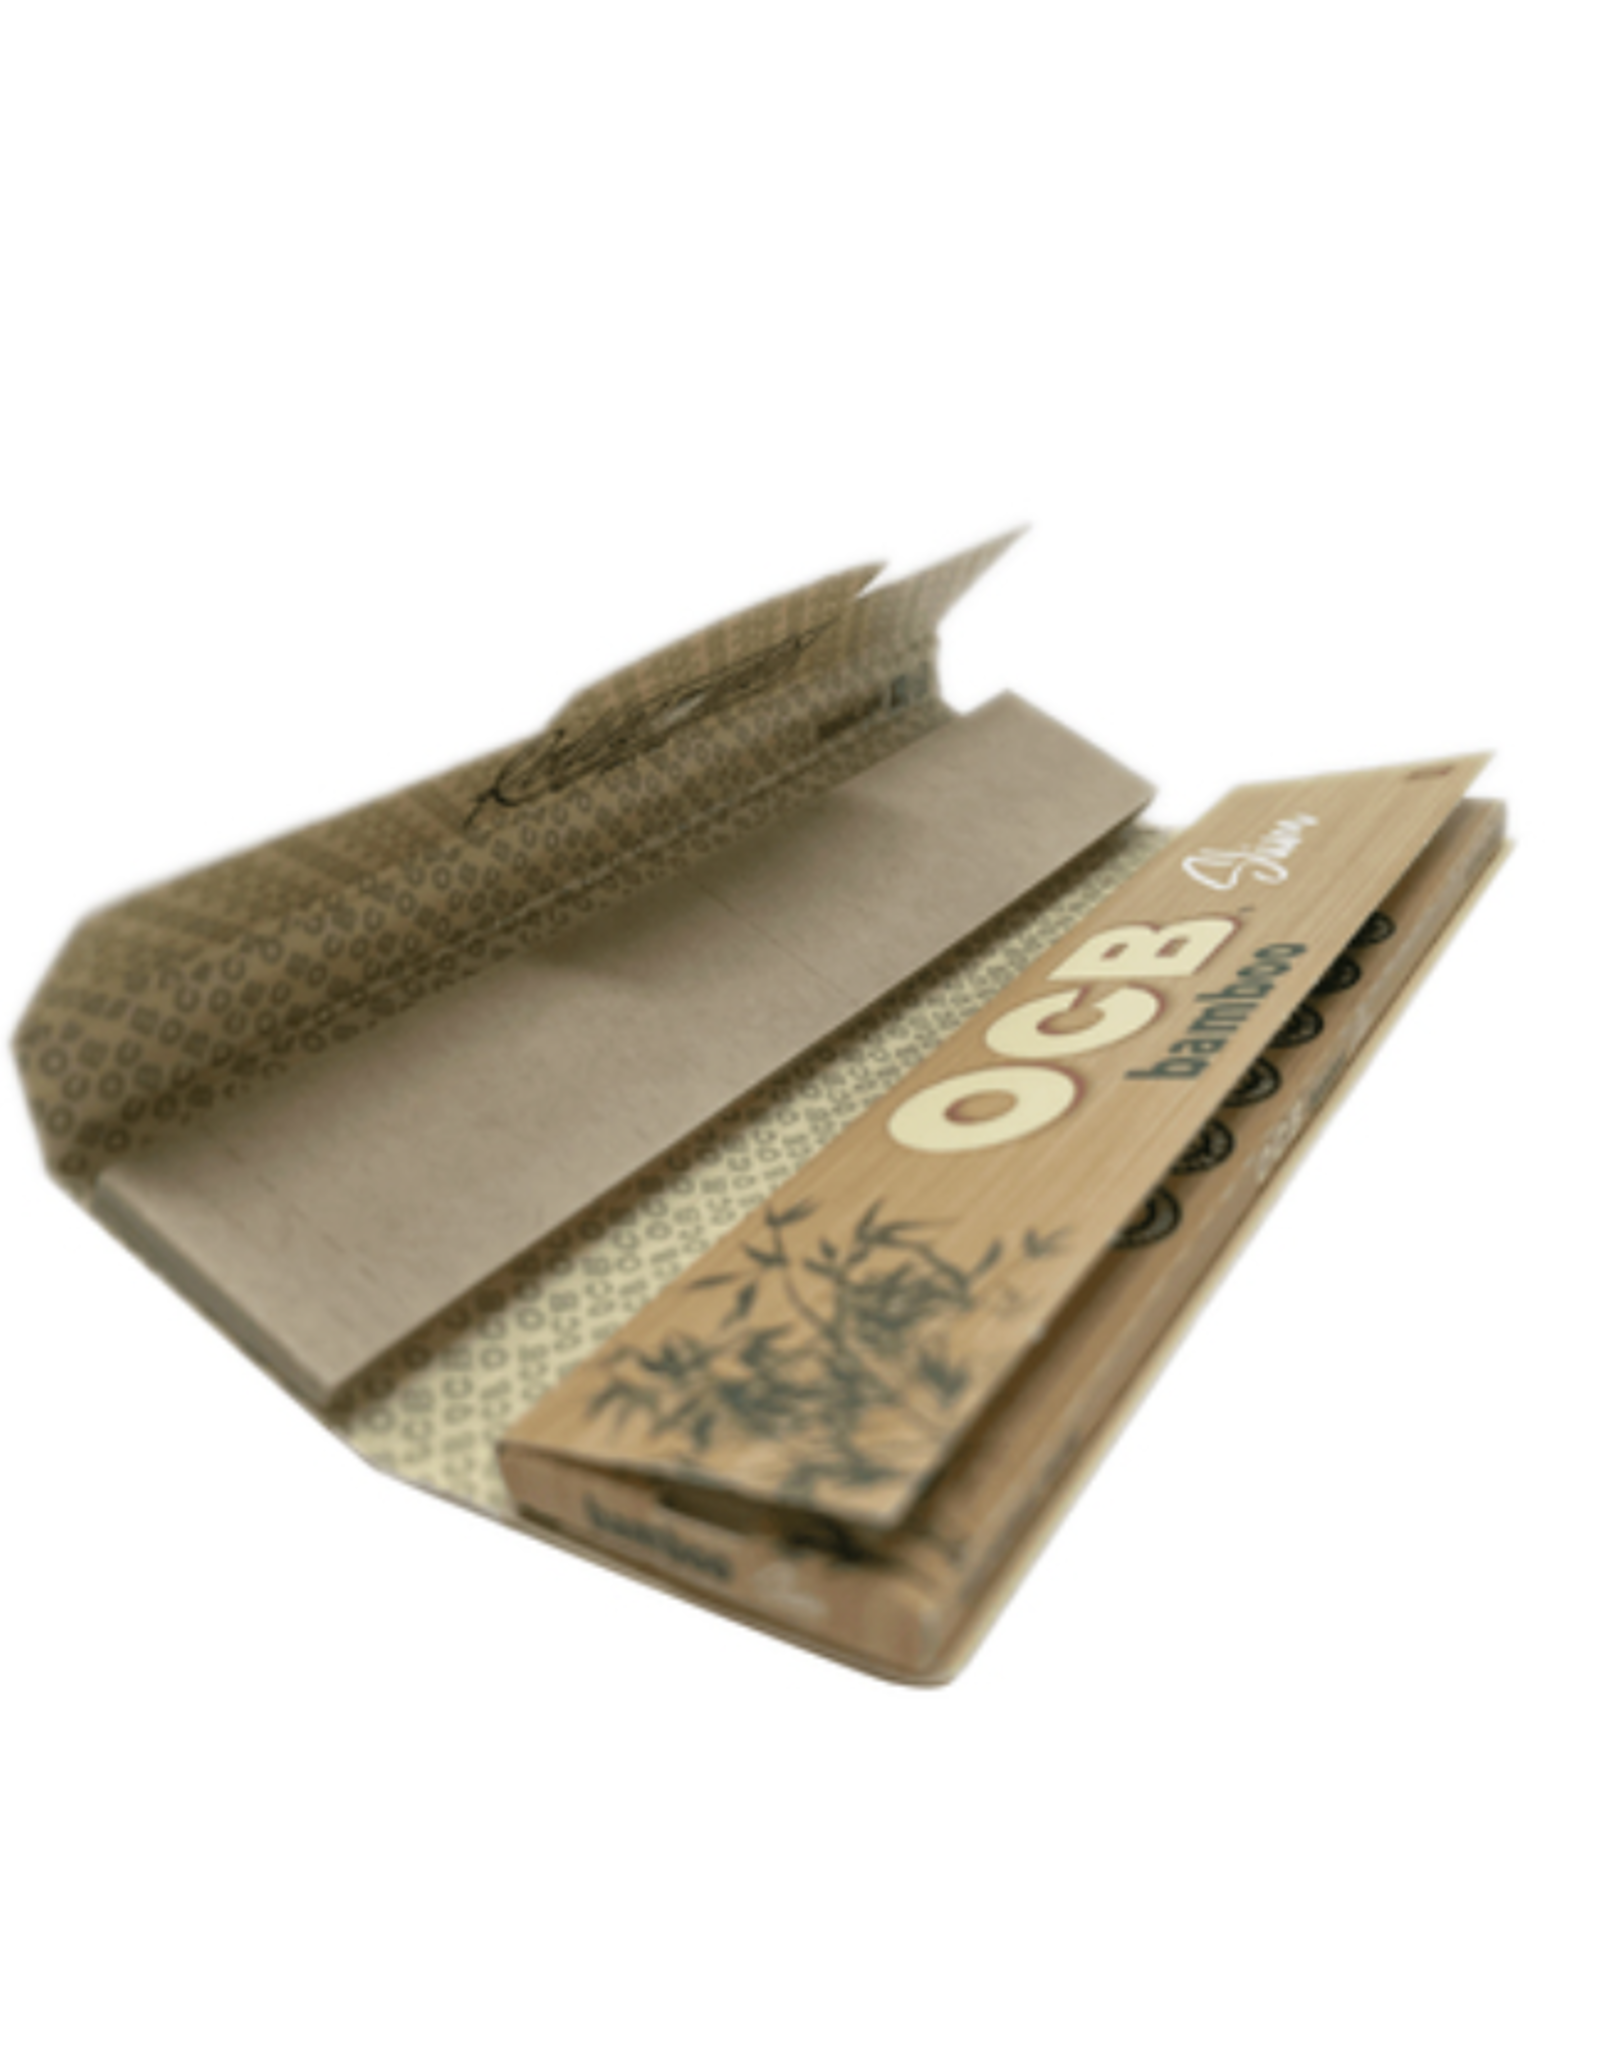 OCB OCB Bamboo Rolling Paper King Size Slim w/ Filter Tips